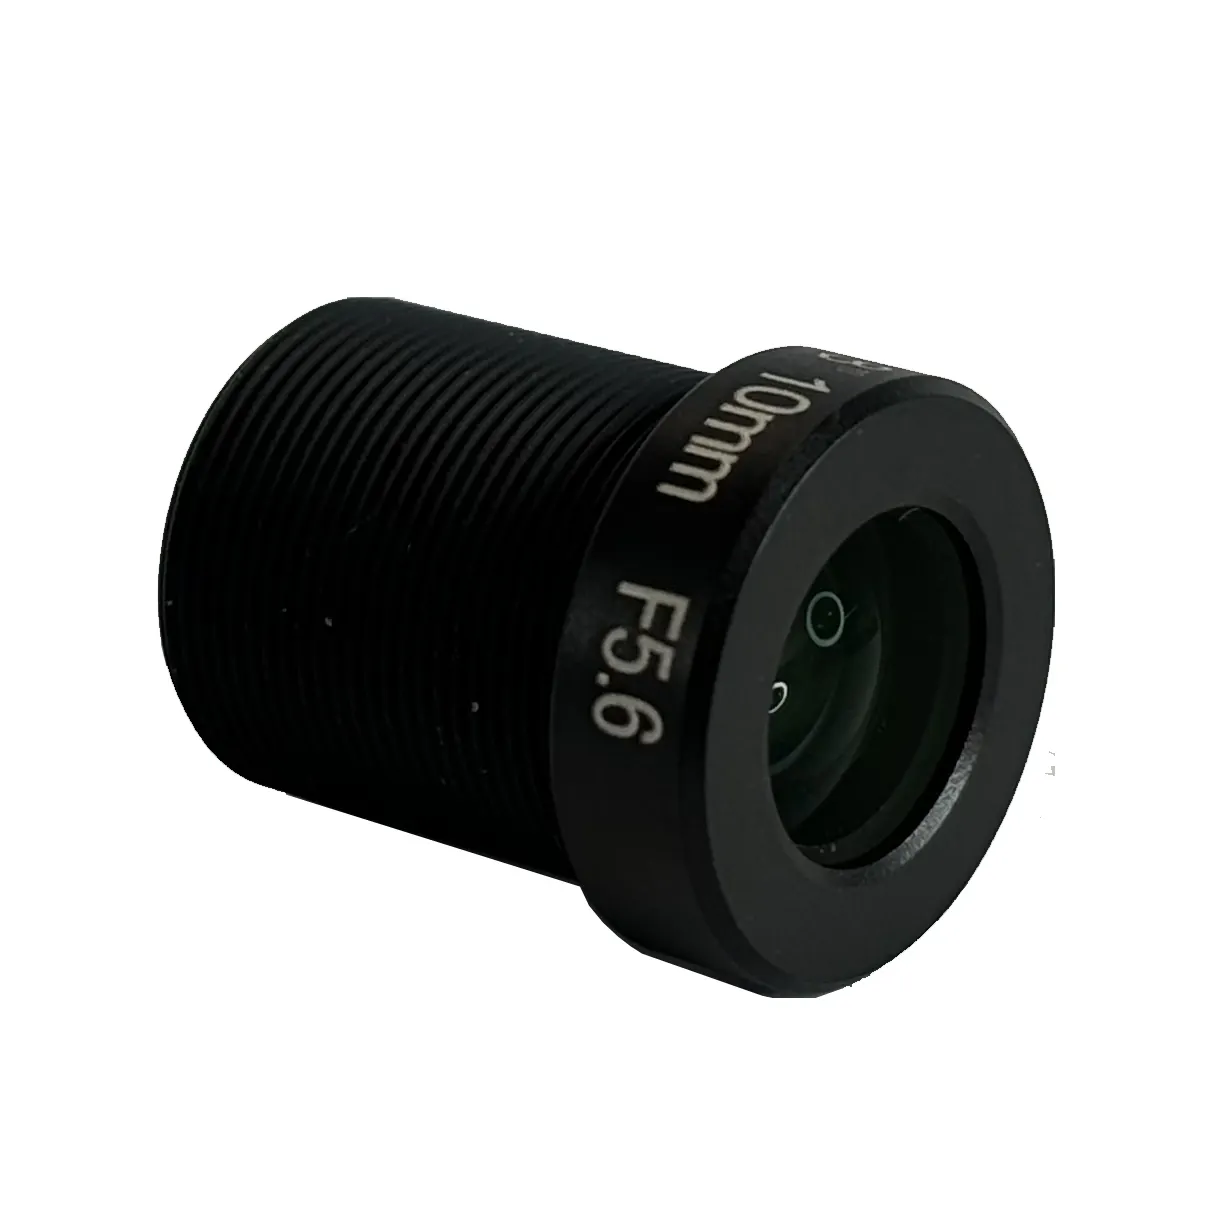 Zhongwei 0.10% bozulma 12MP çözünürlük F/5.6 1/1.8 "sensör S montaj IR filtre 10mm odak Lens